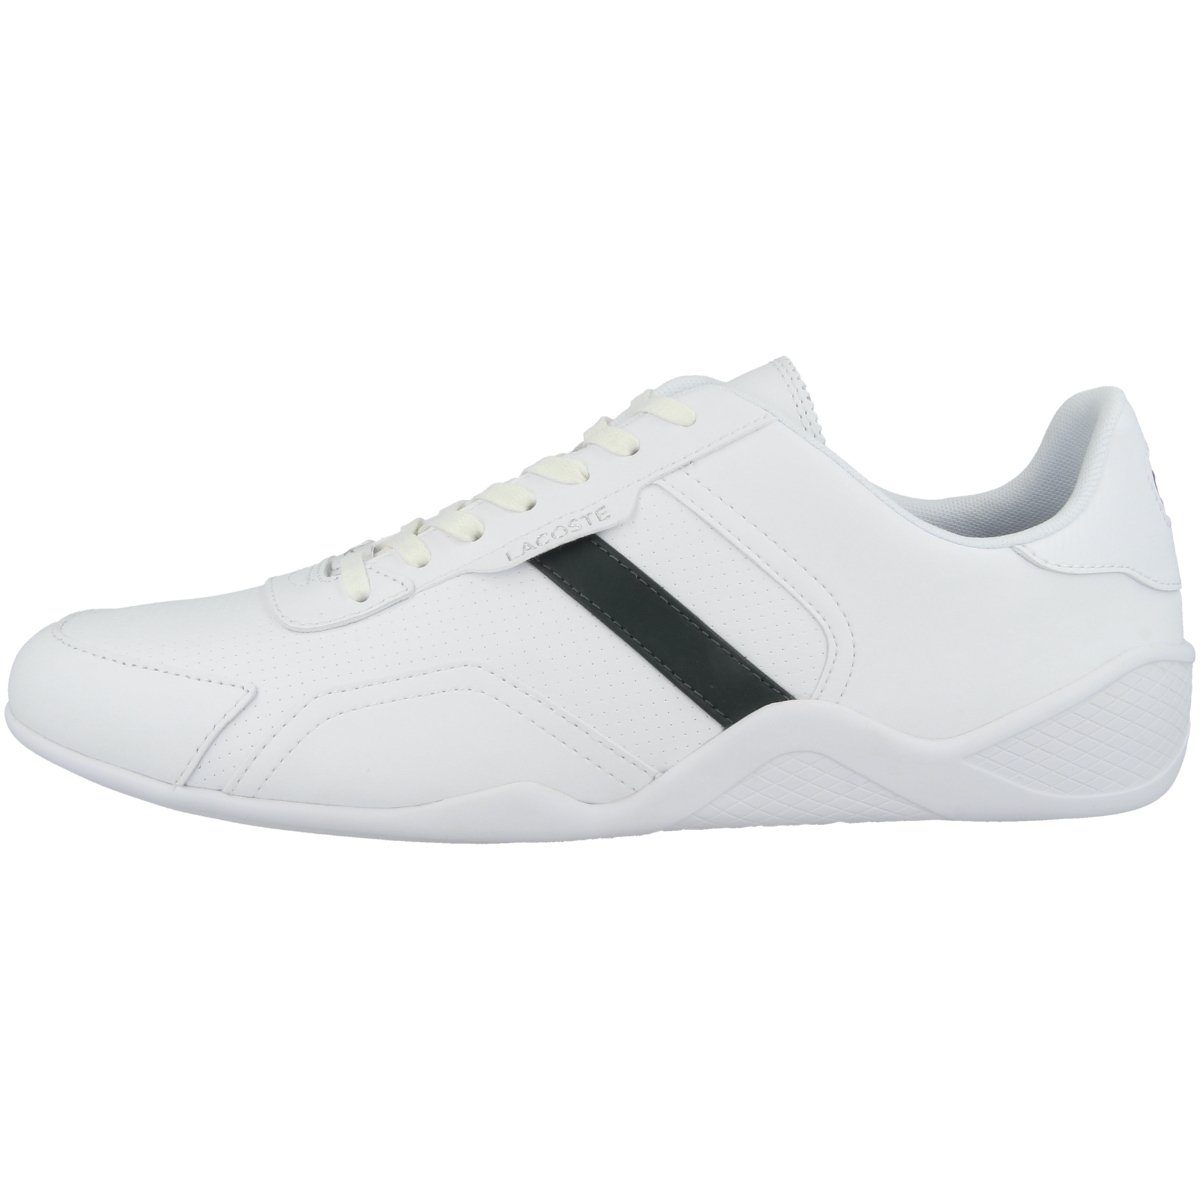 Lacoste »Hapona 0721 1 Herren« Sneaker kaufen | OTTO